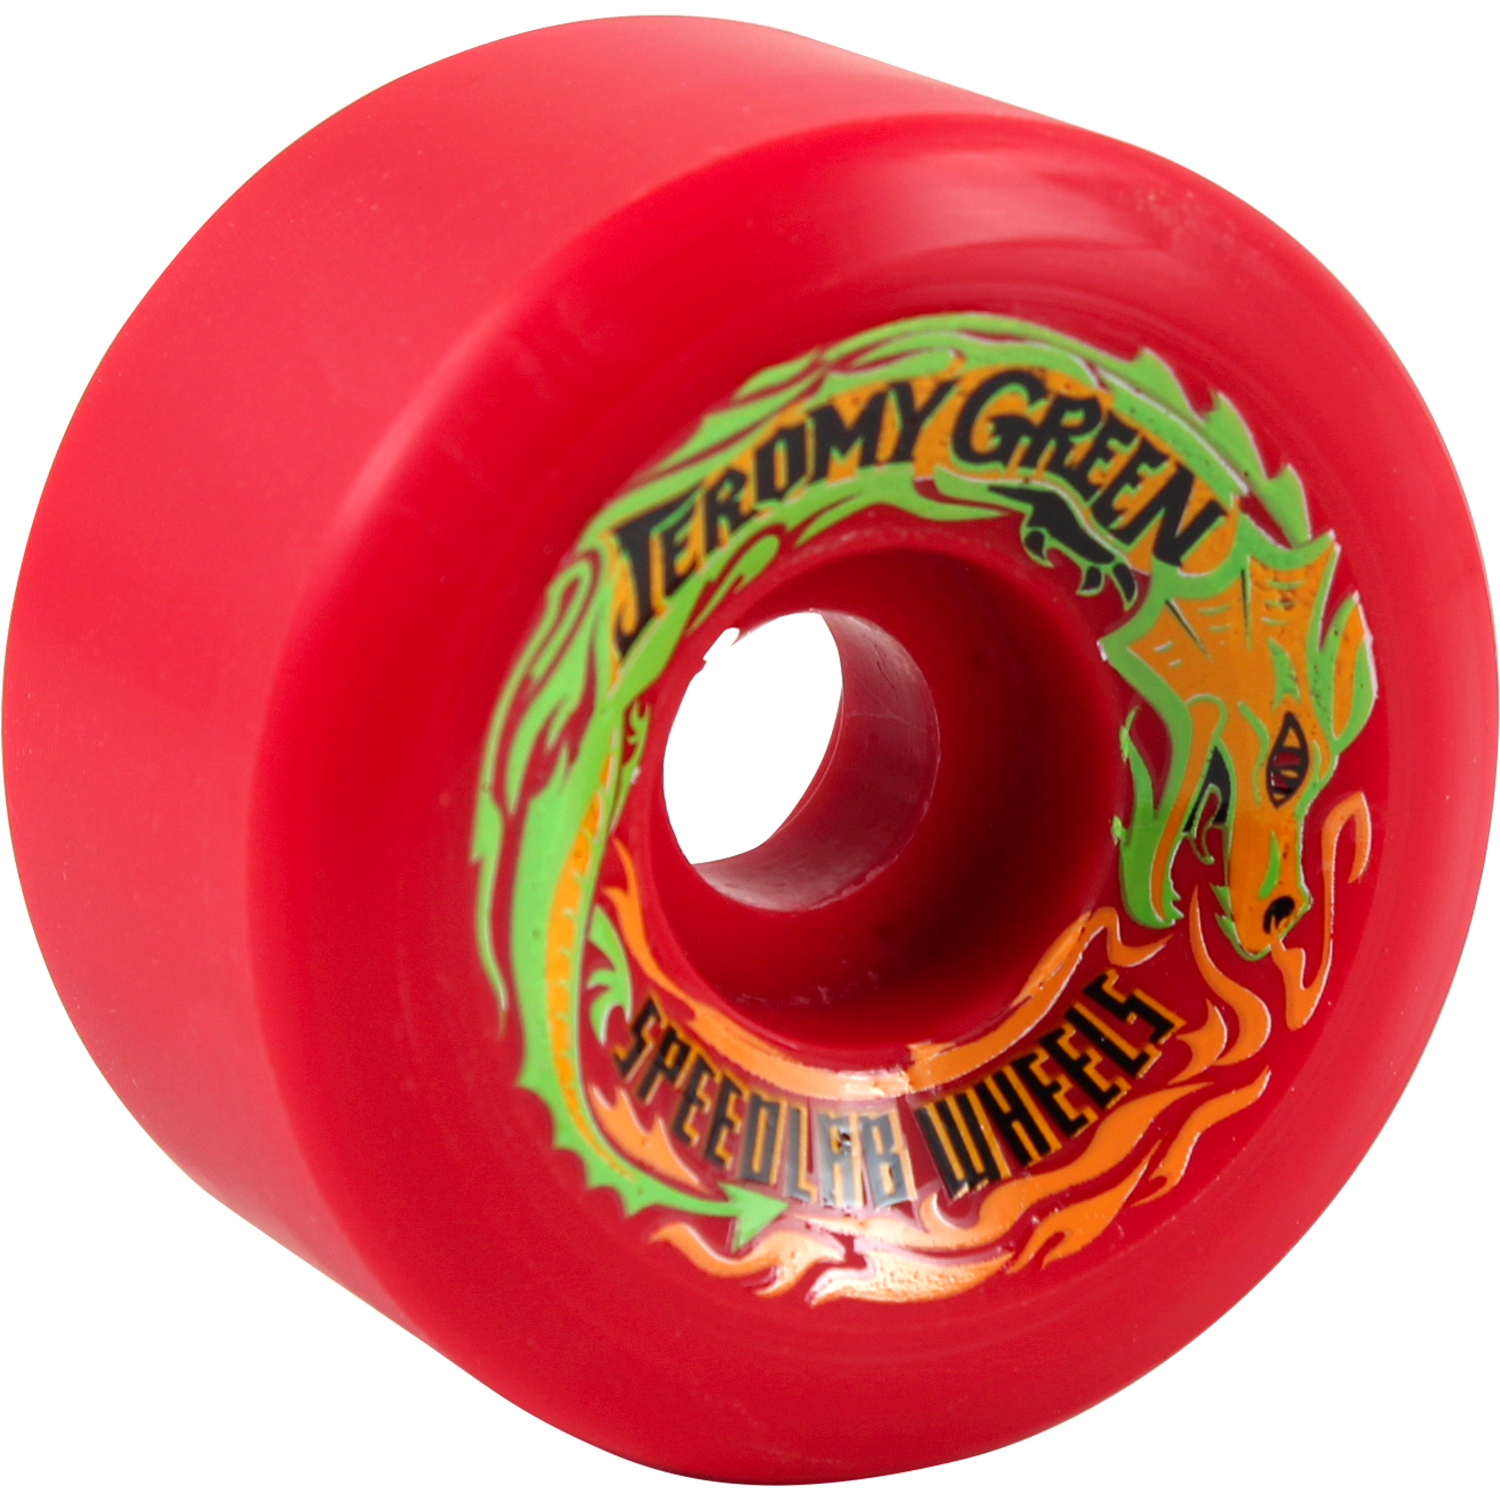 Speedlab Green Pro 59mm 99a Red Skateboard Wheels (Set of 4)